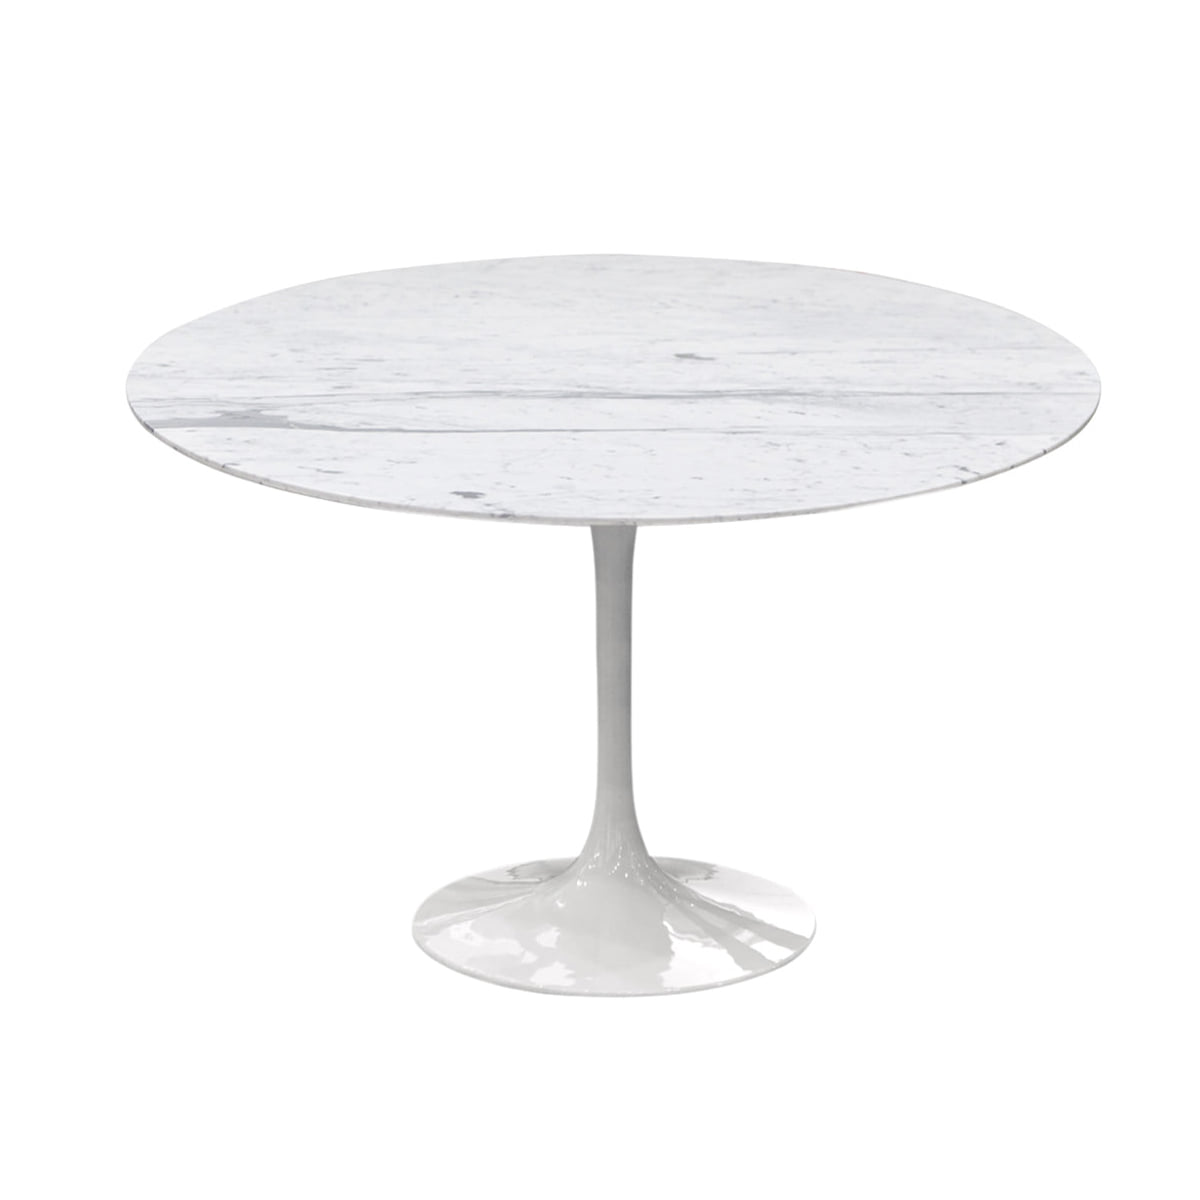 Round Marble Table 원형 대리석 식탁 (Ø120)